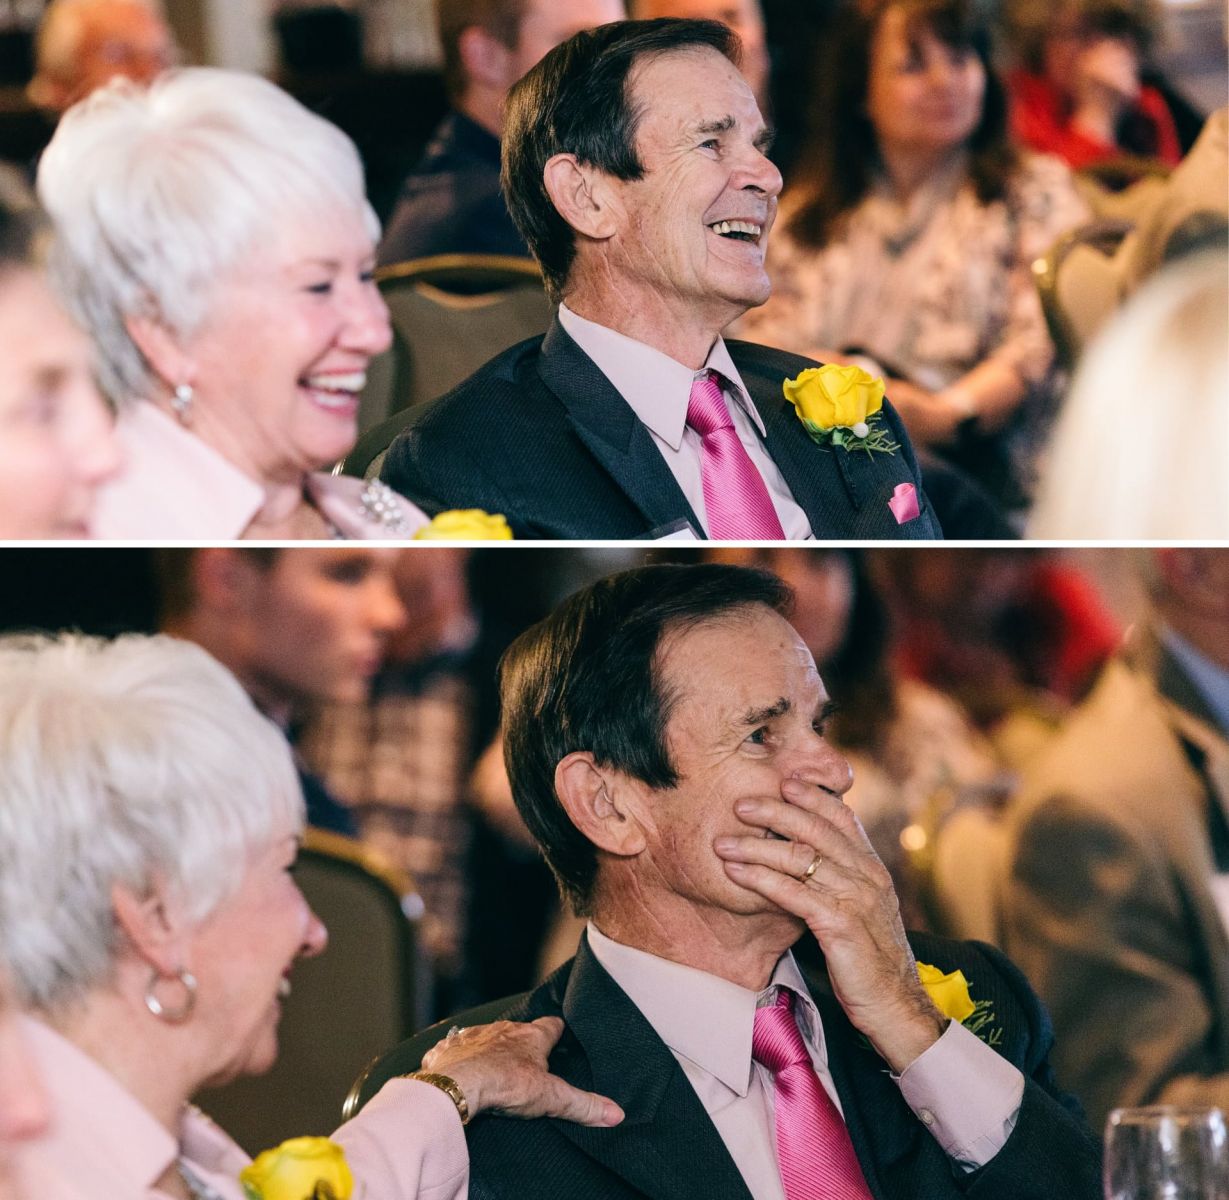 Jane and John Doddridge react during the presentation of his award